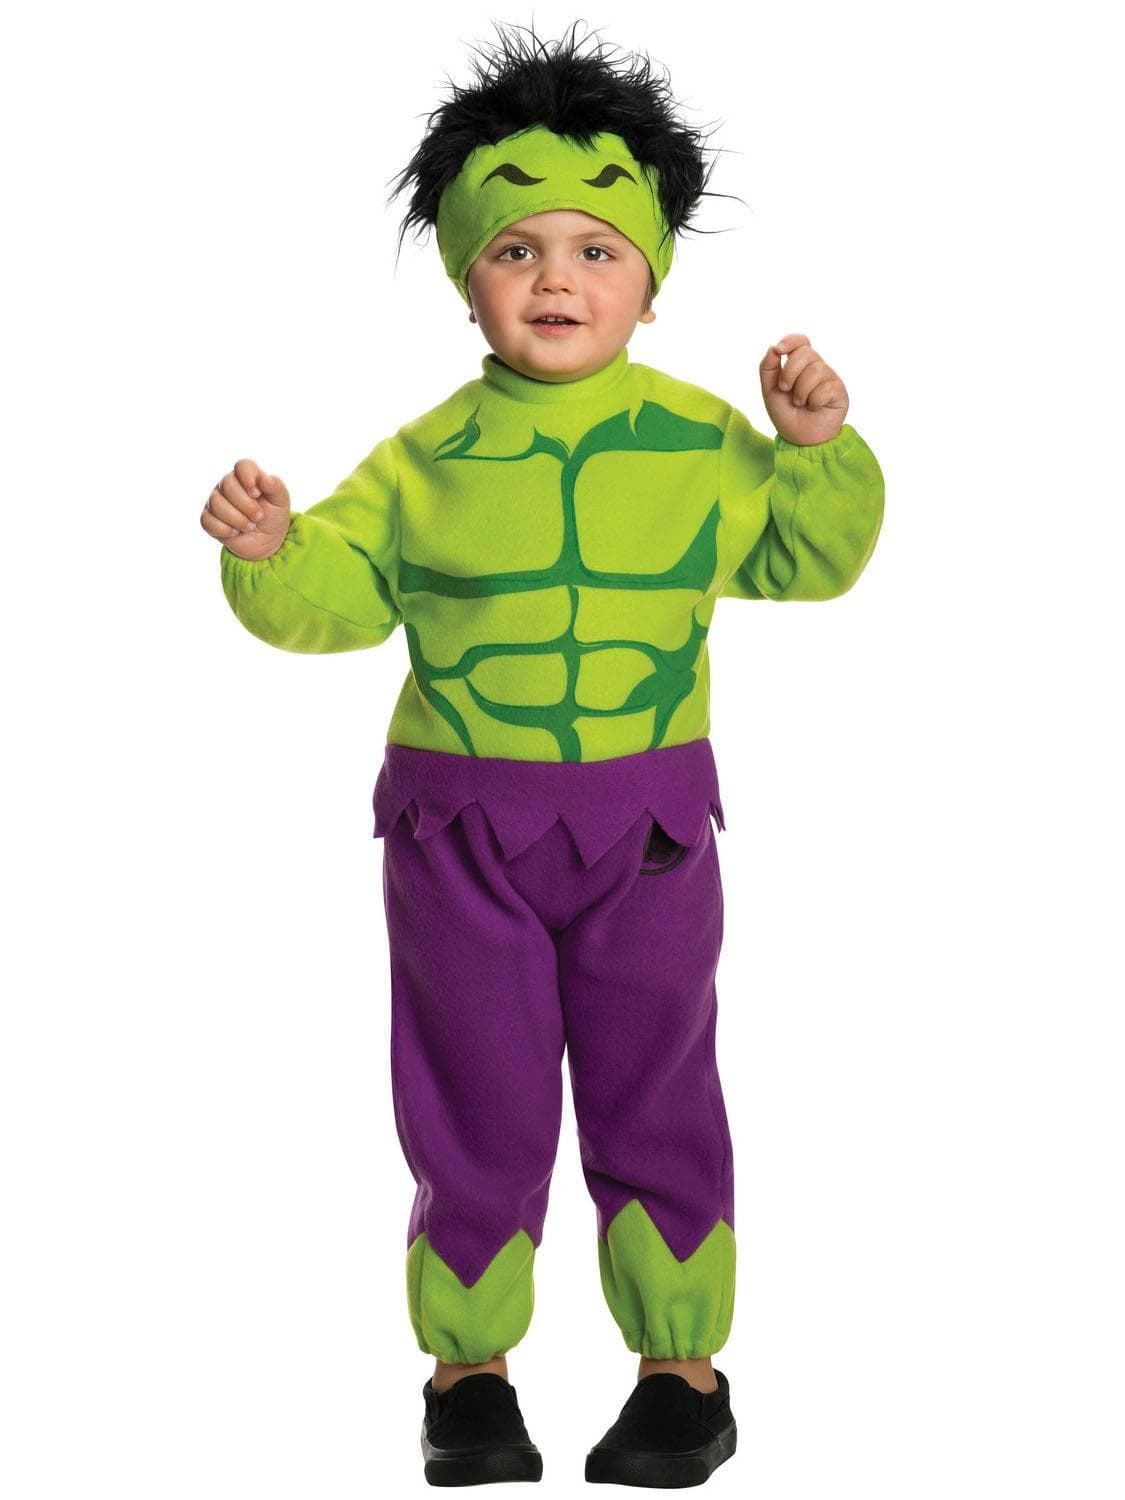 Hulk Child Costume - costumes.com